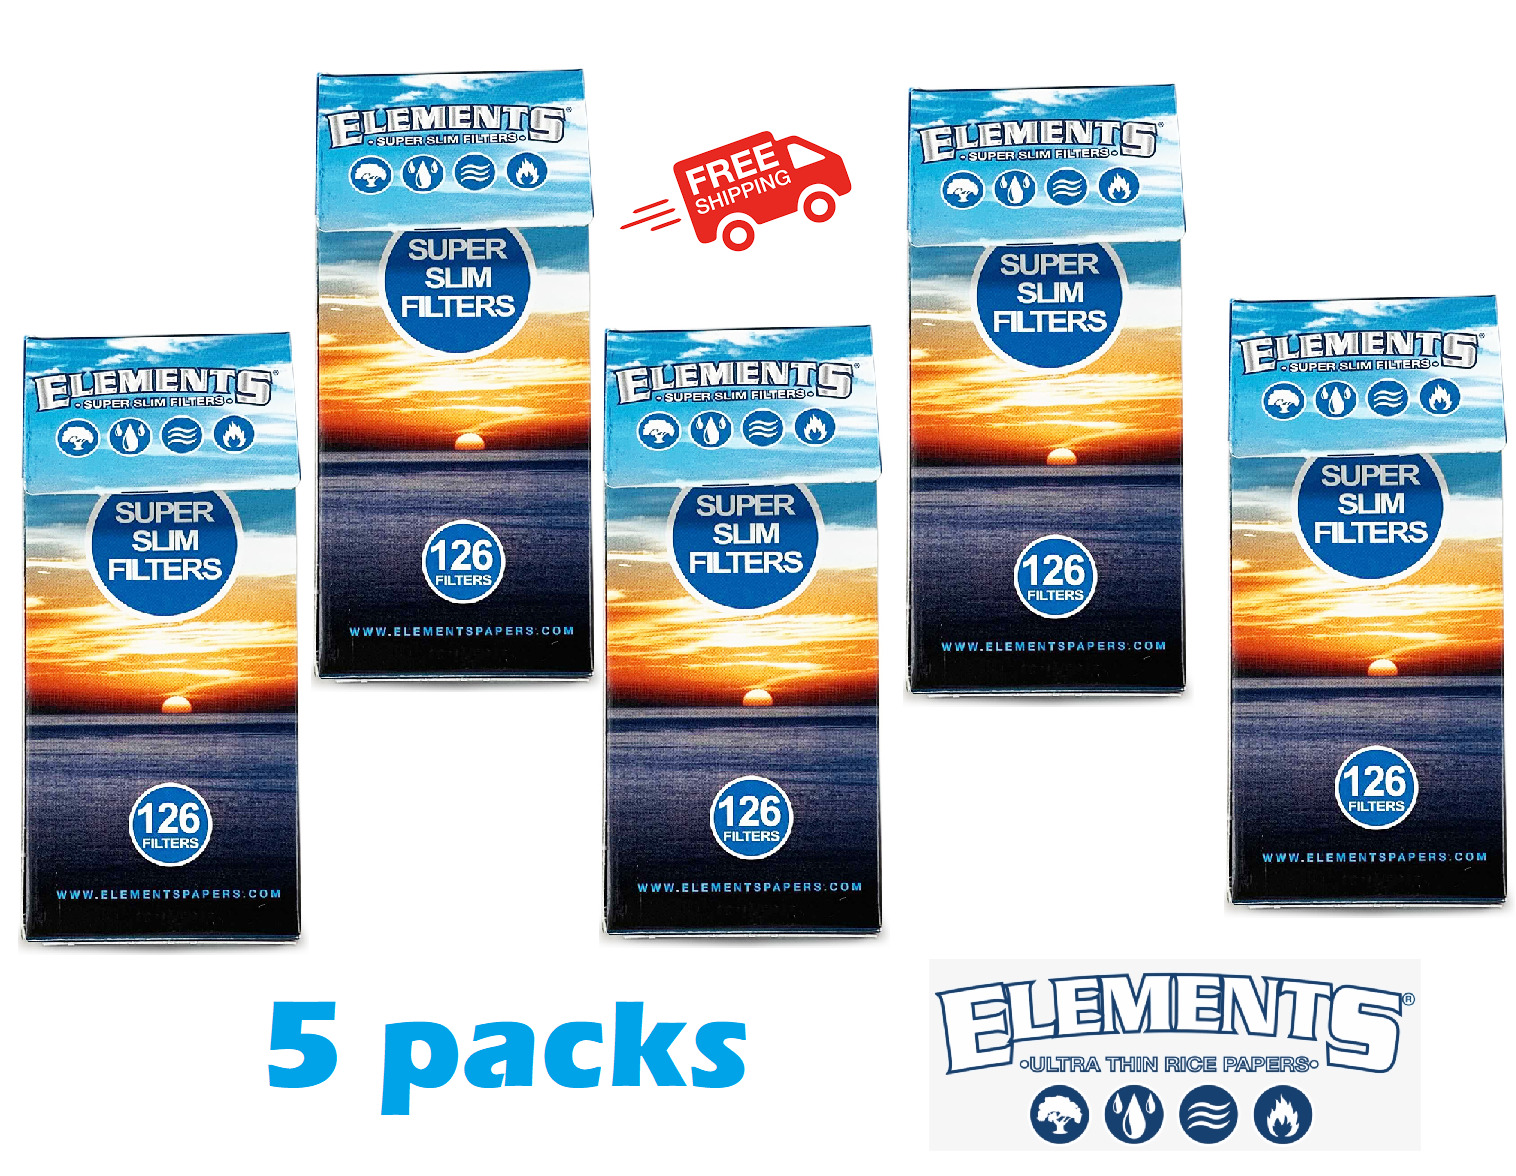 Elements Super Slim Cigarette Filters (5 BOXES OF 126) 630 count  